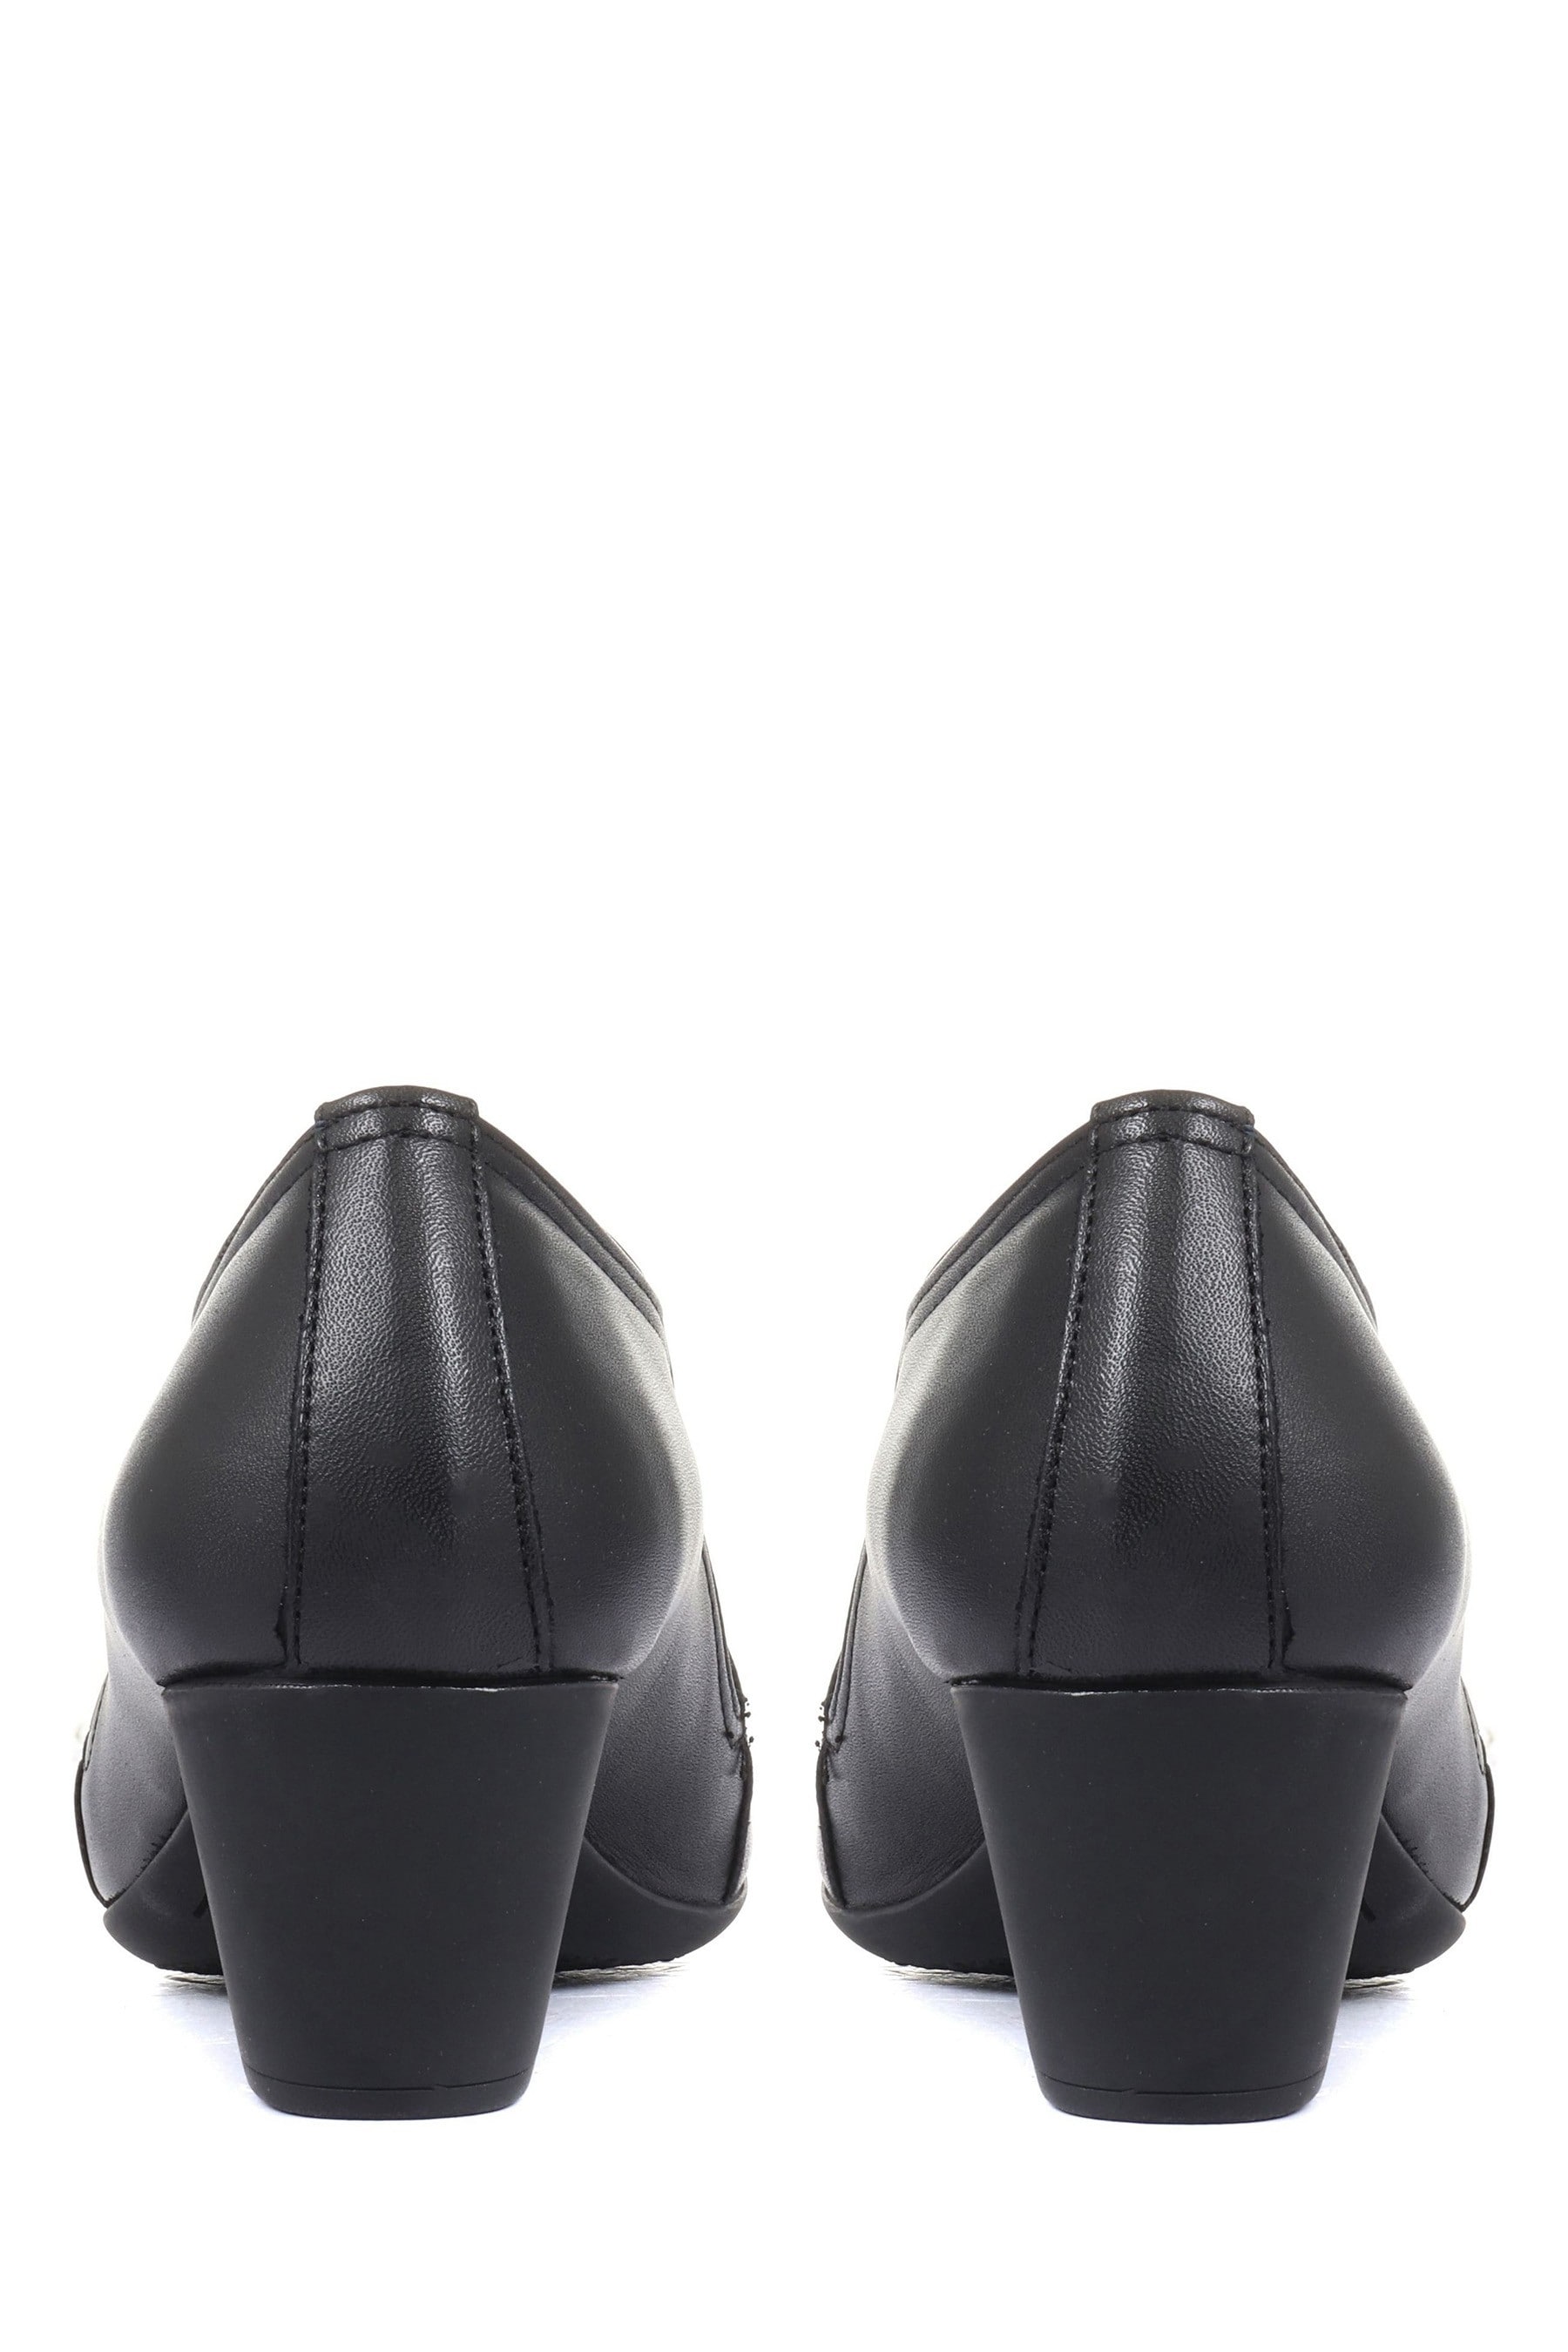 Gabor Emanuel 5539137 Black Leather Trouser Shoe  Ladies from Crichton Shoes  UK